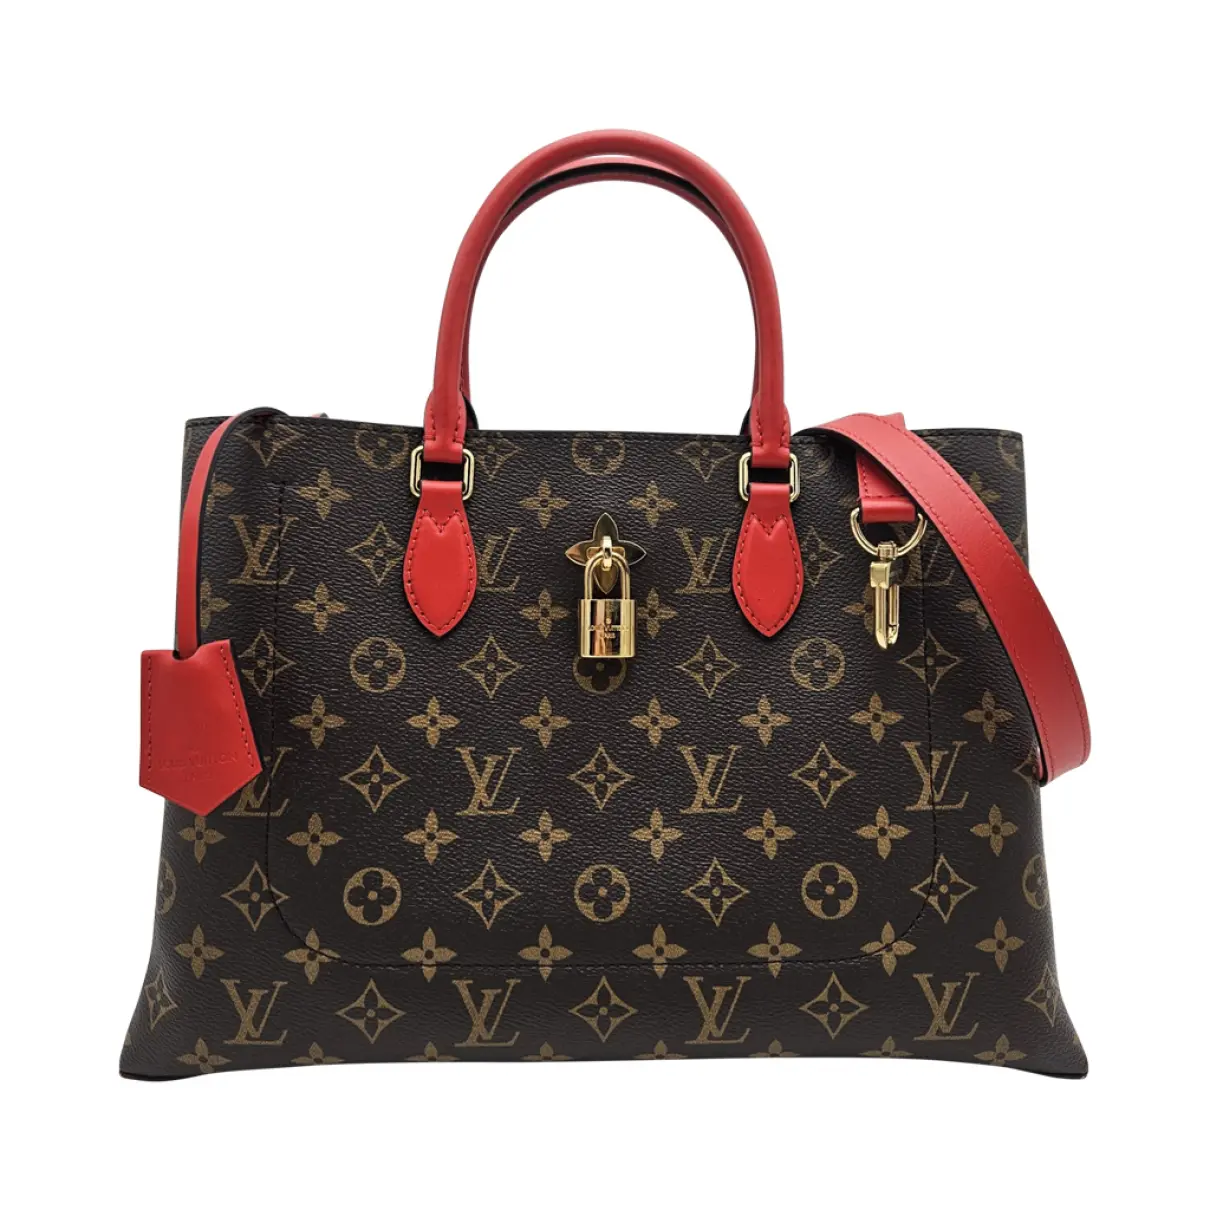 Buy Louis Vuitton Flower Tote leather handbag online